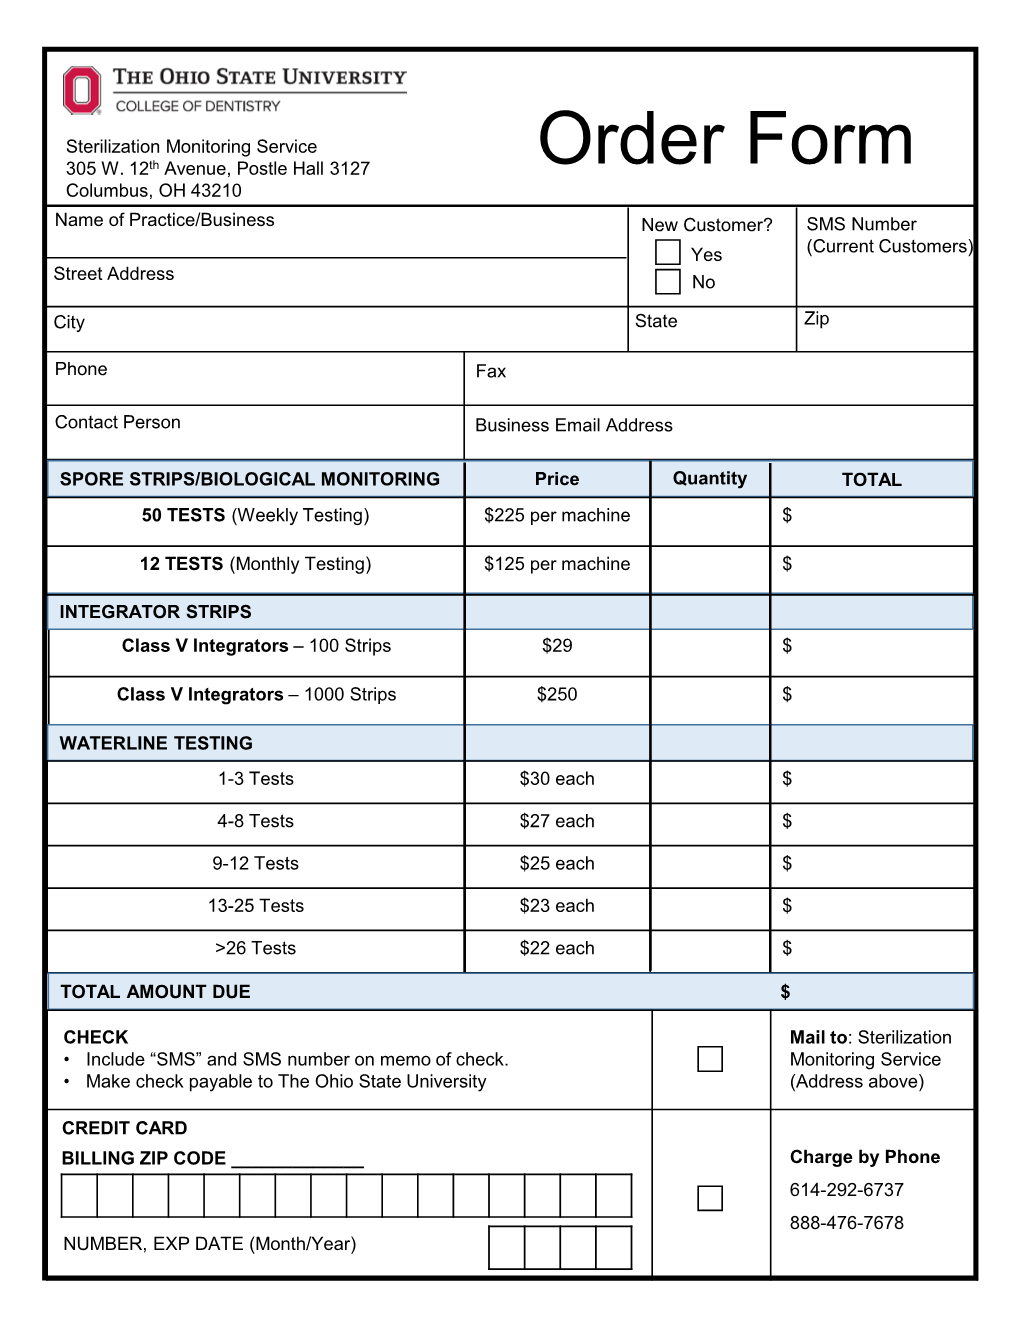 Order Form & Instructions